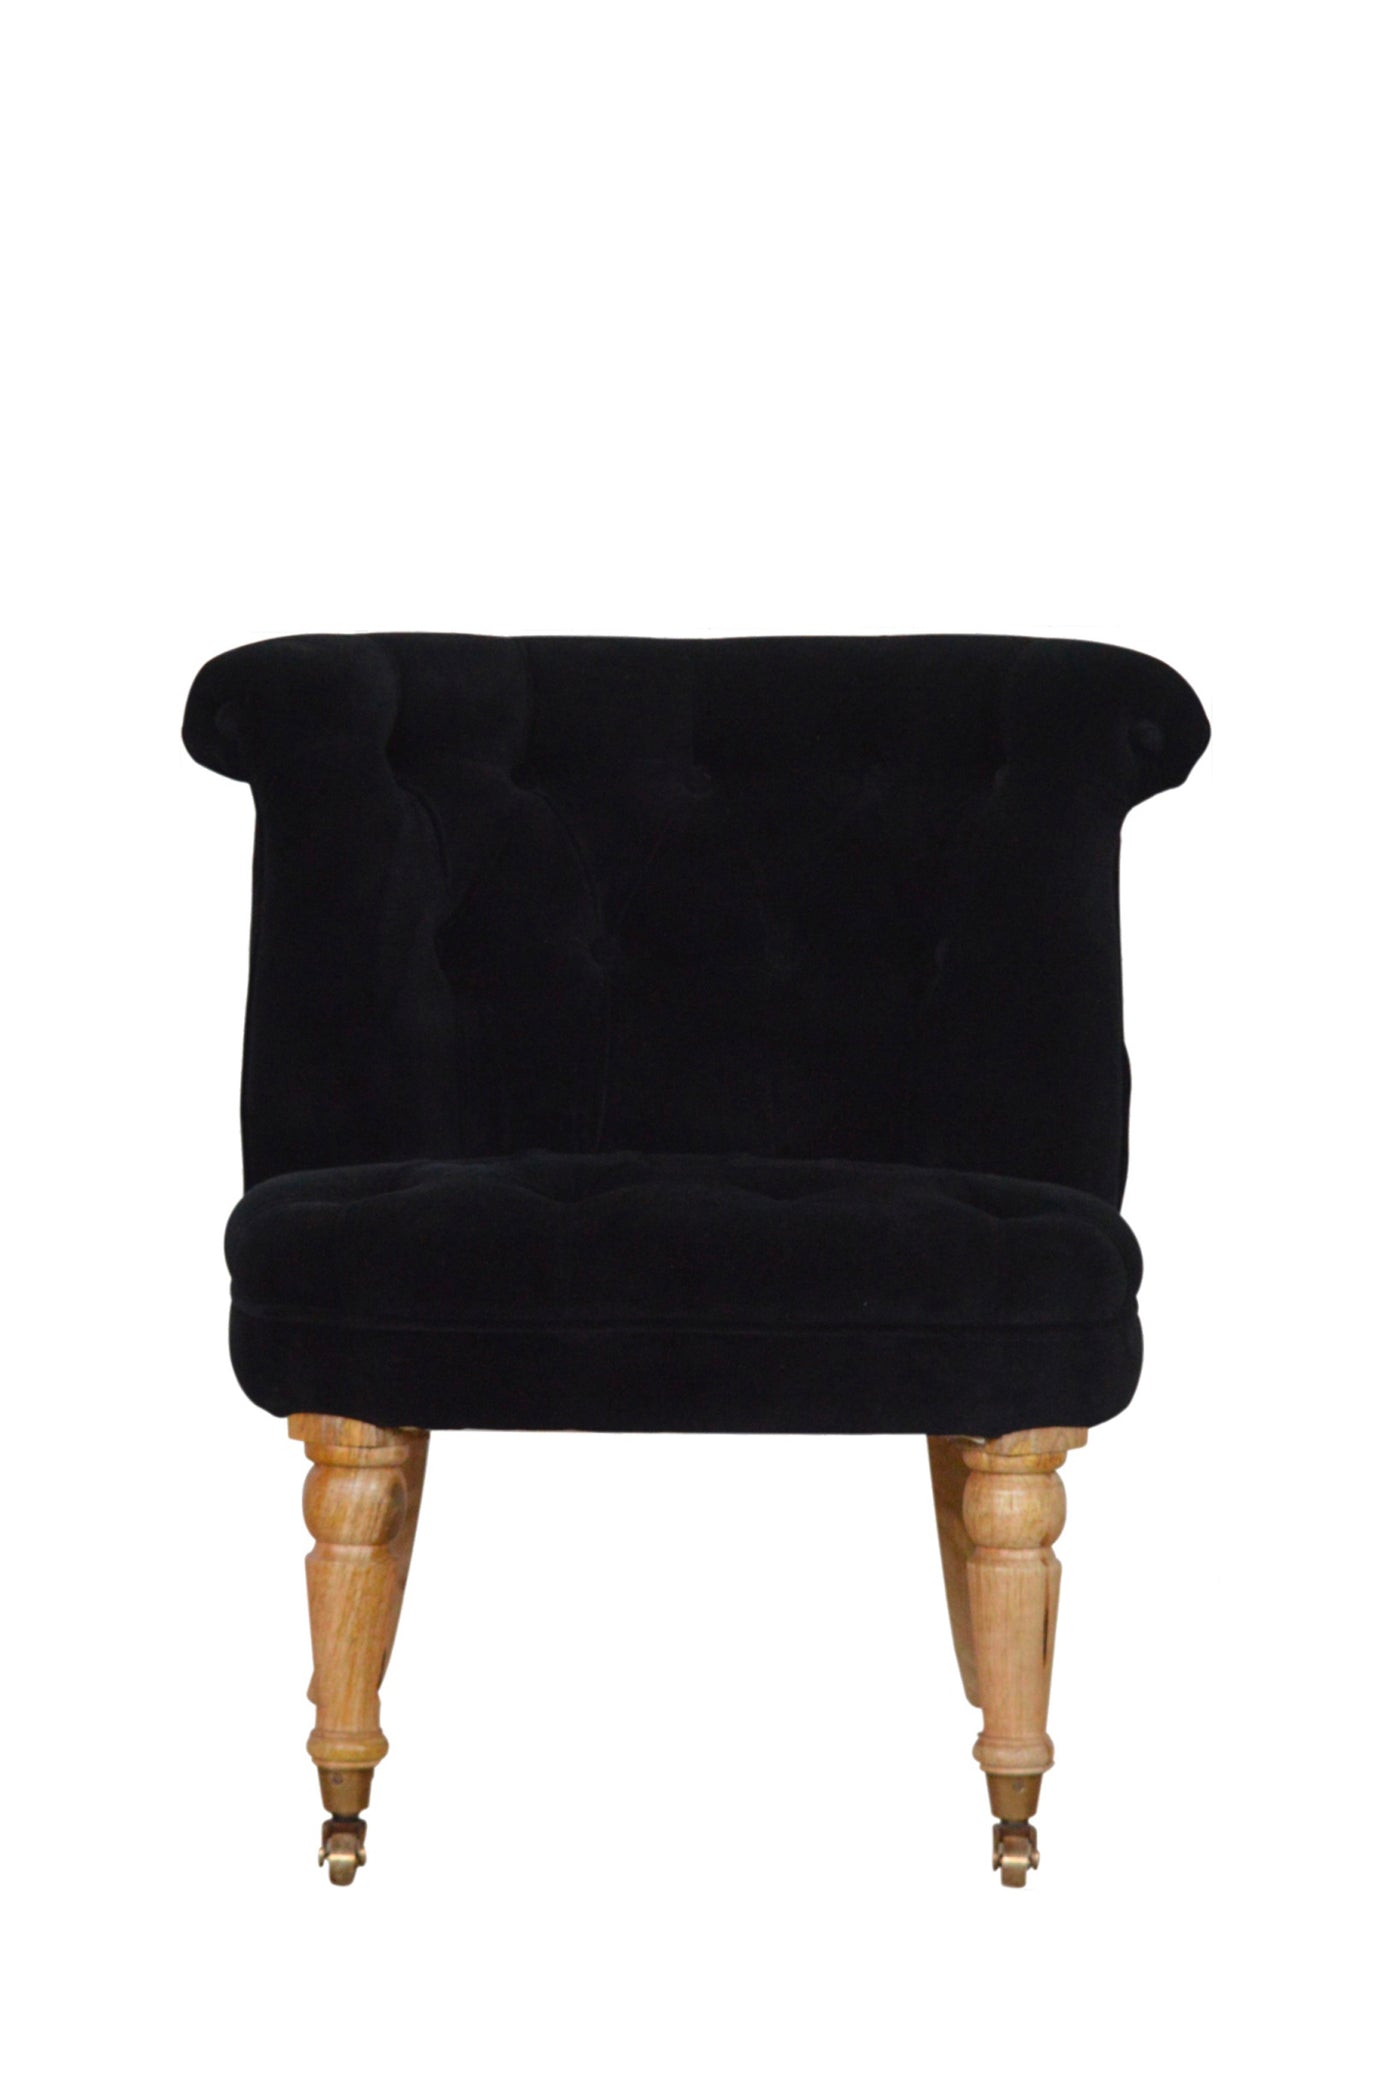 Pimlico - Chair Castors Black